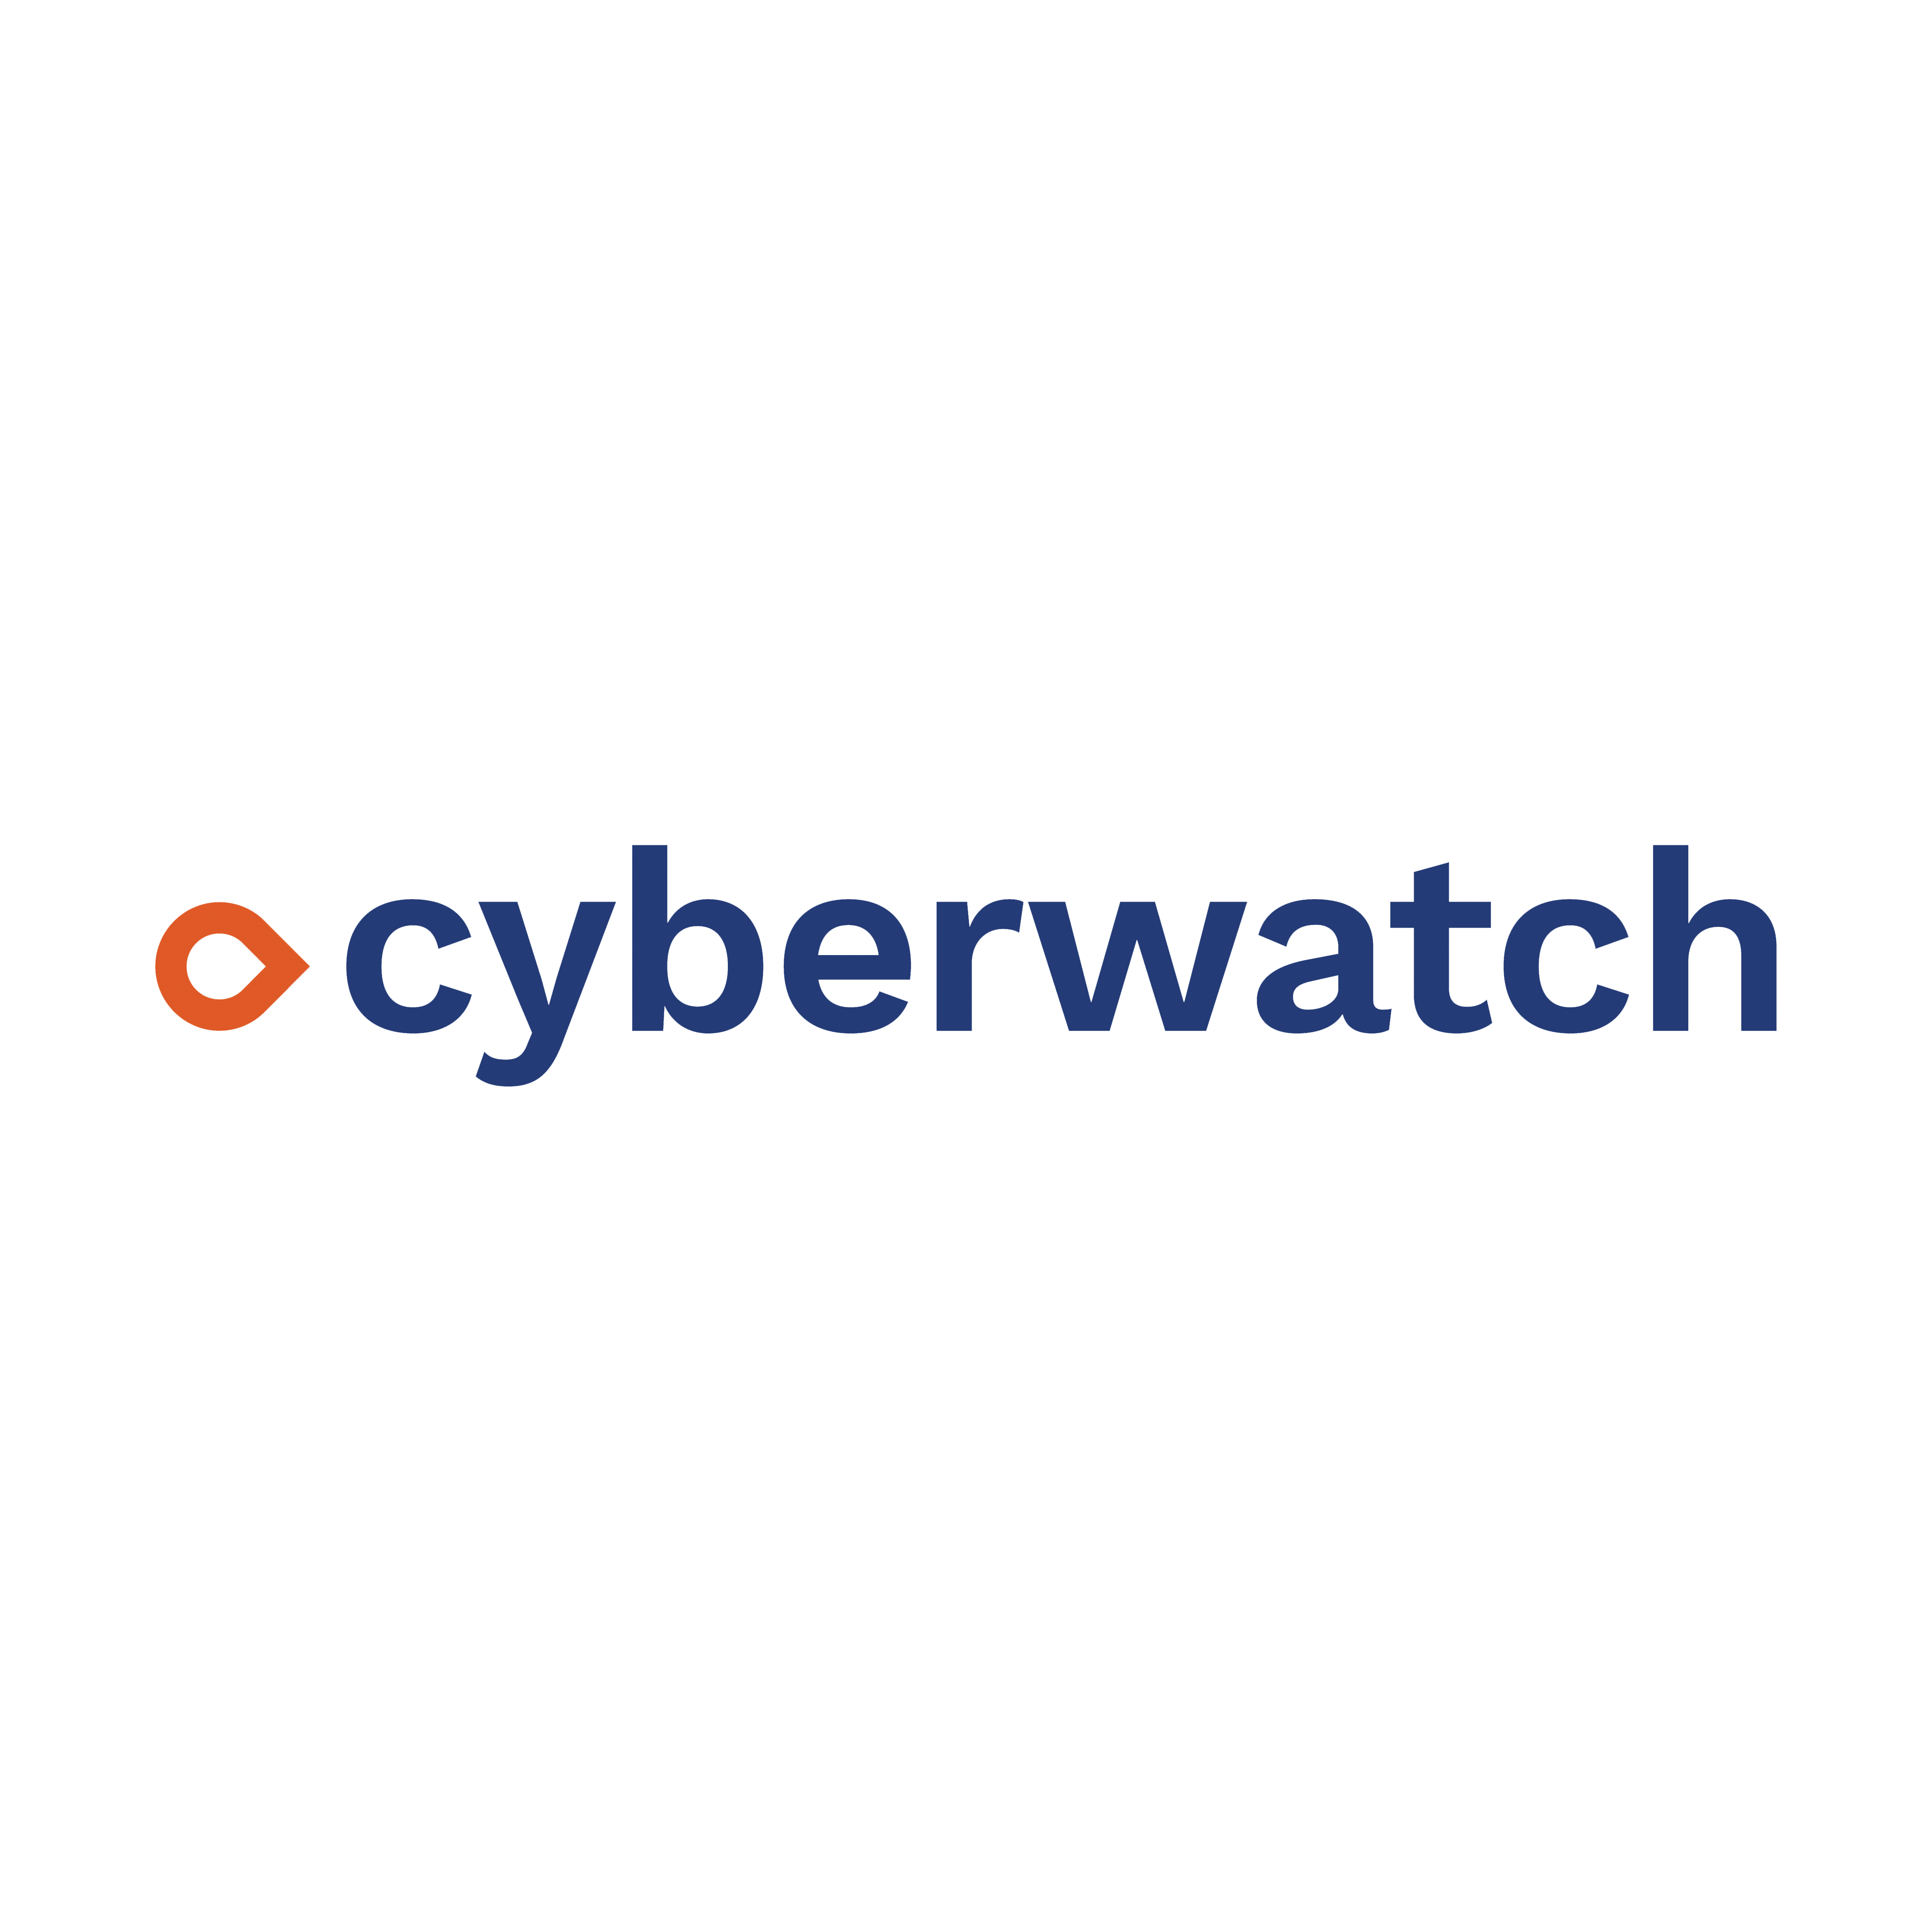 Cyberwatch